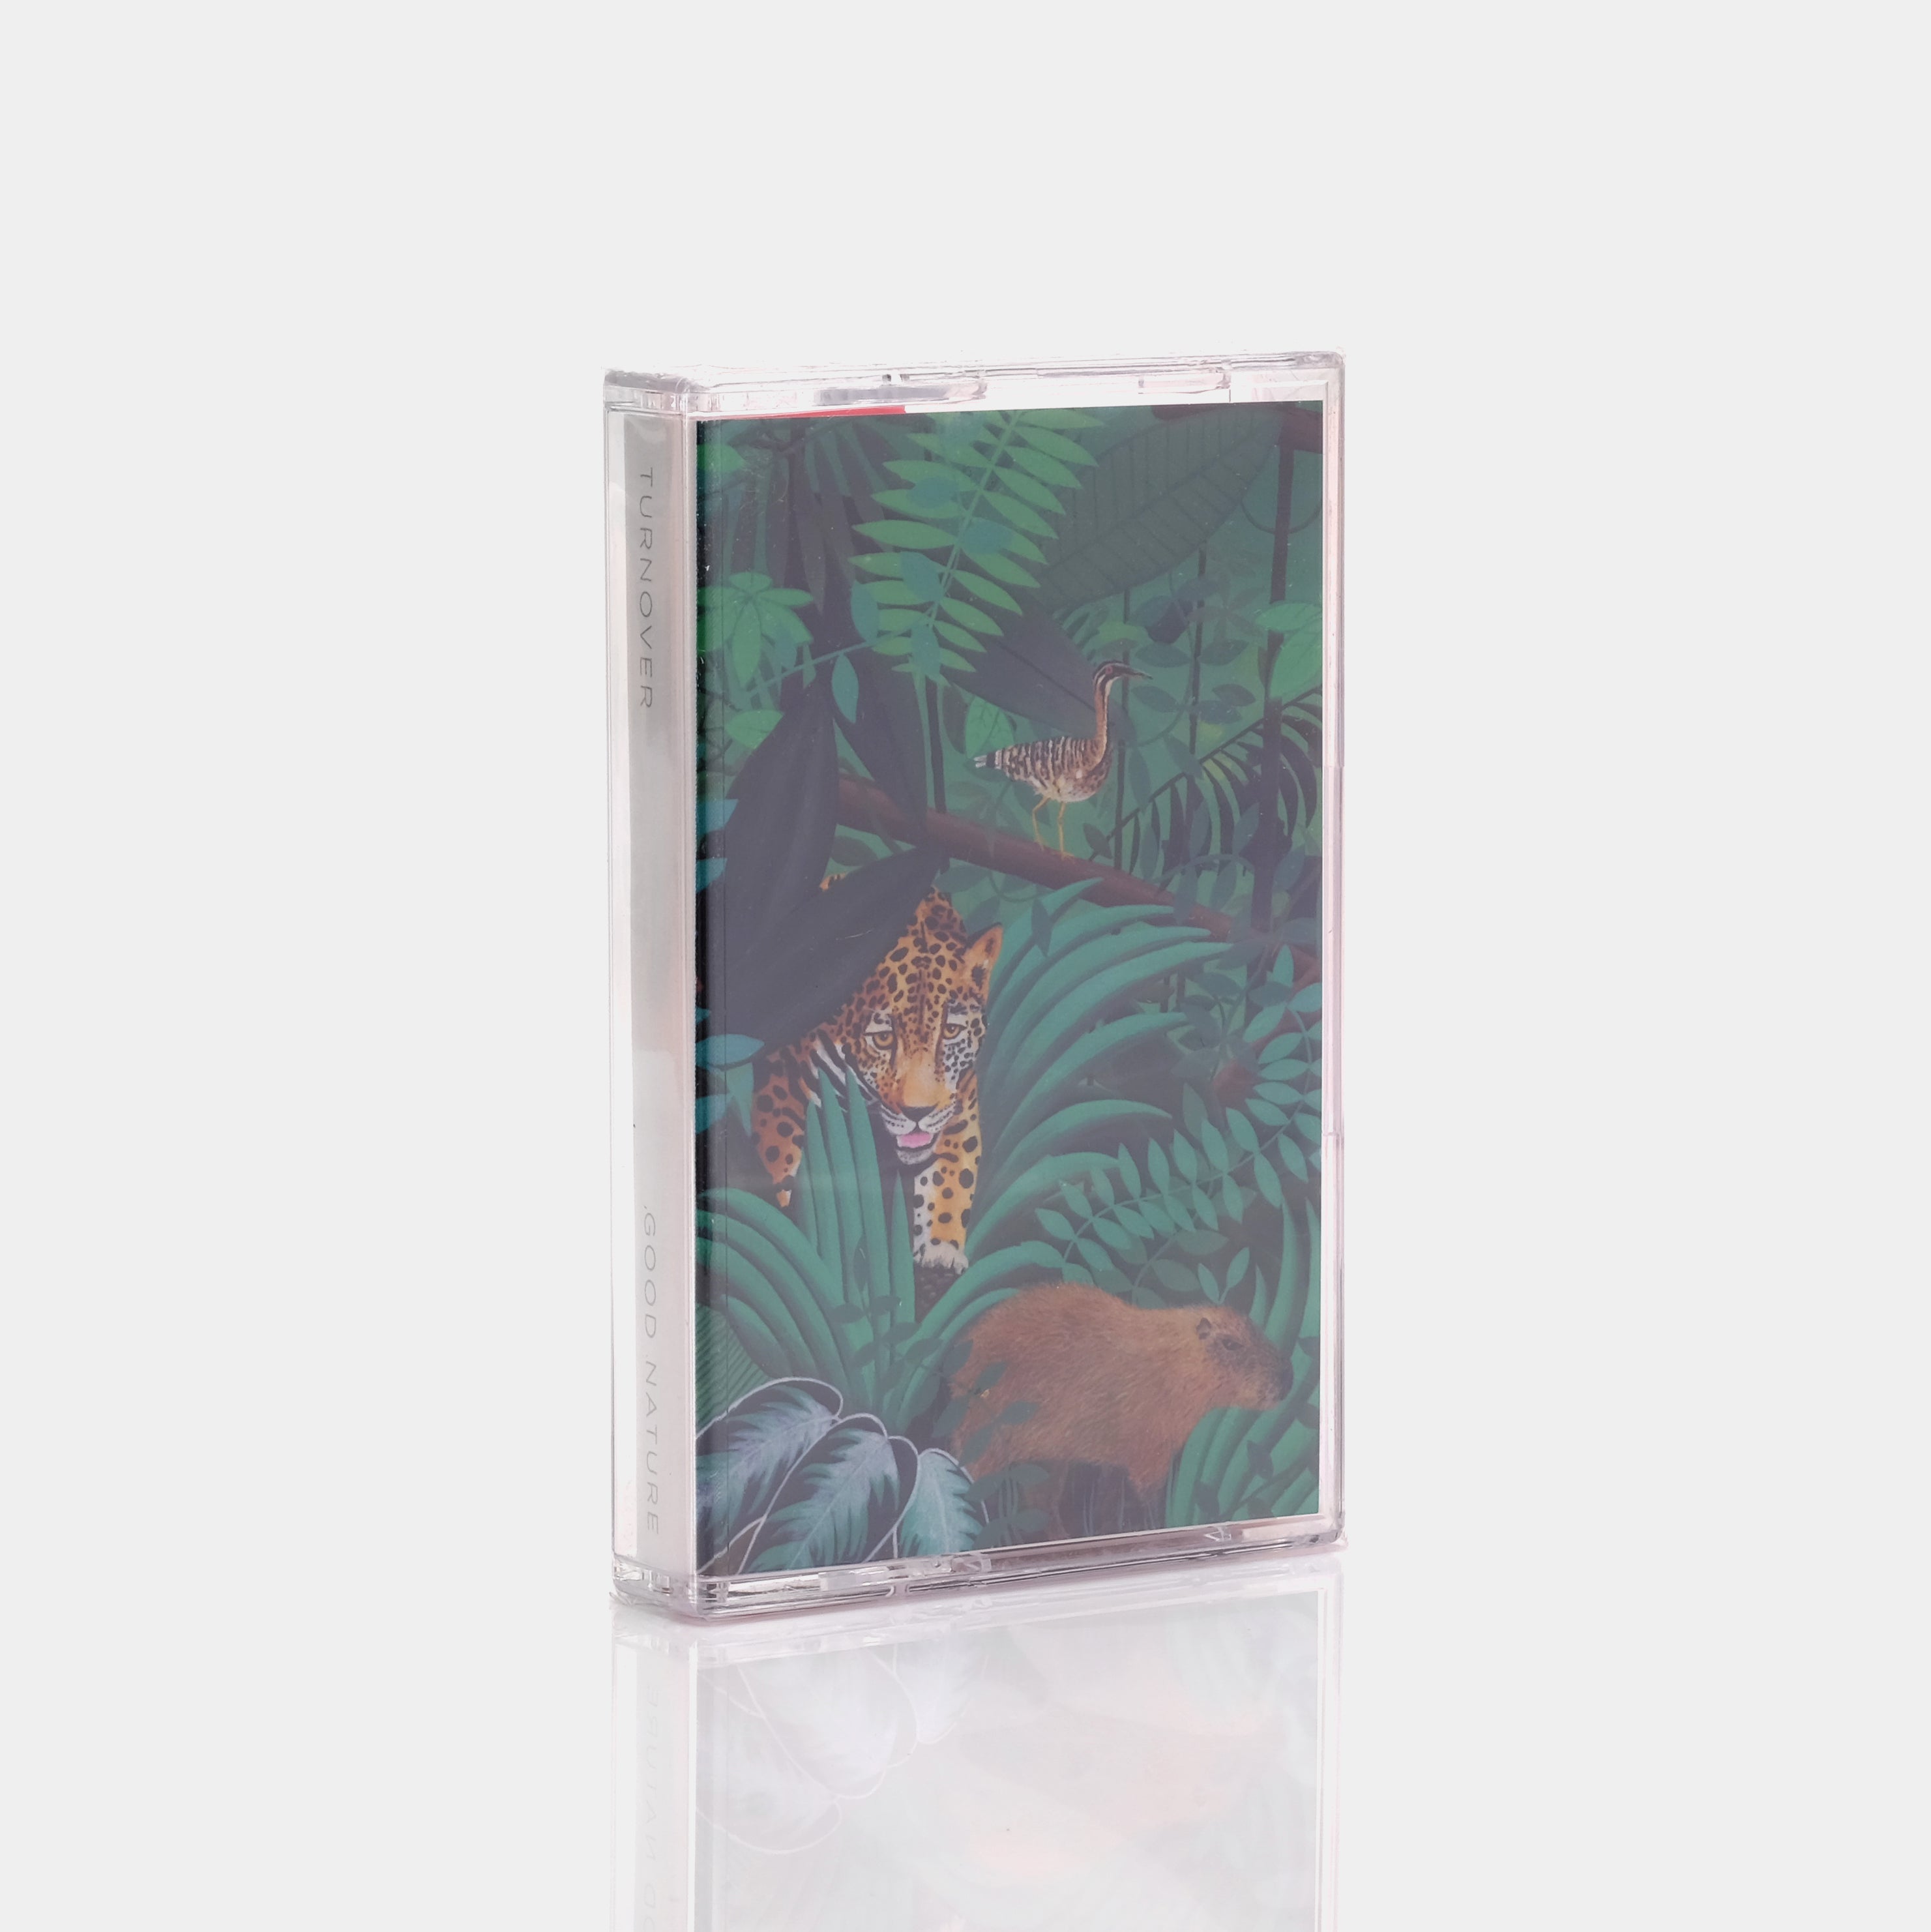 Turnover - Good Nature Cassette Tape